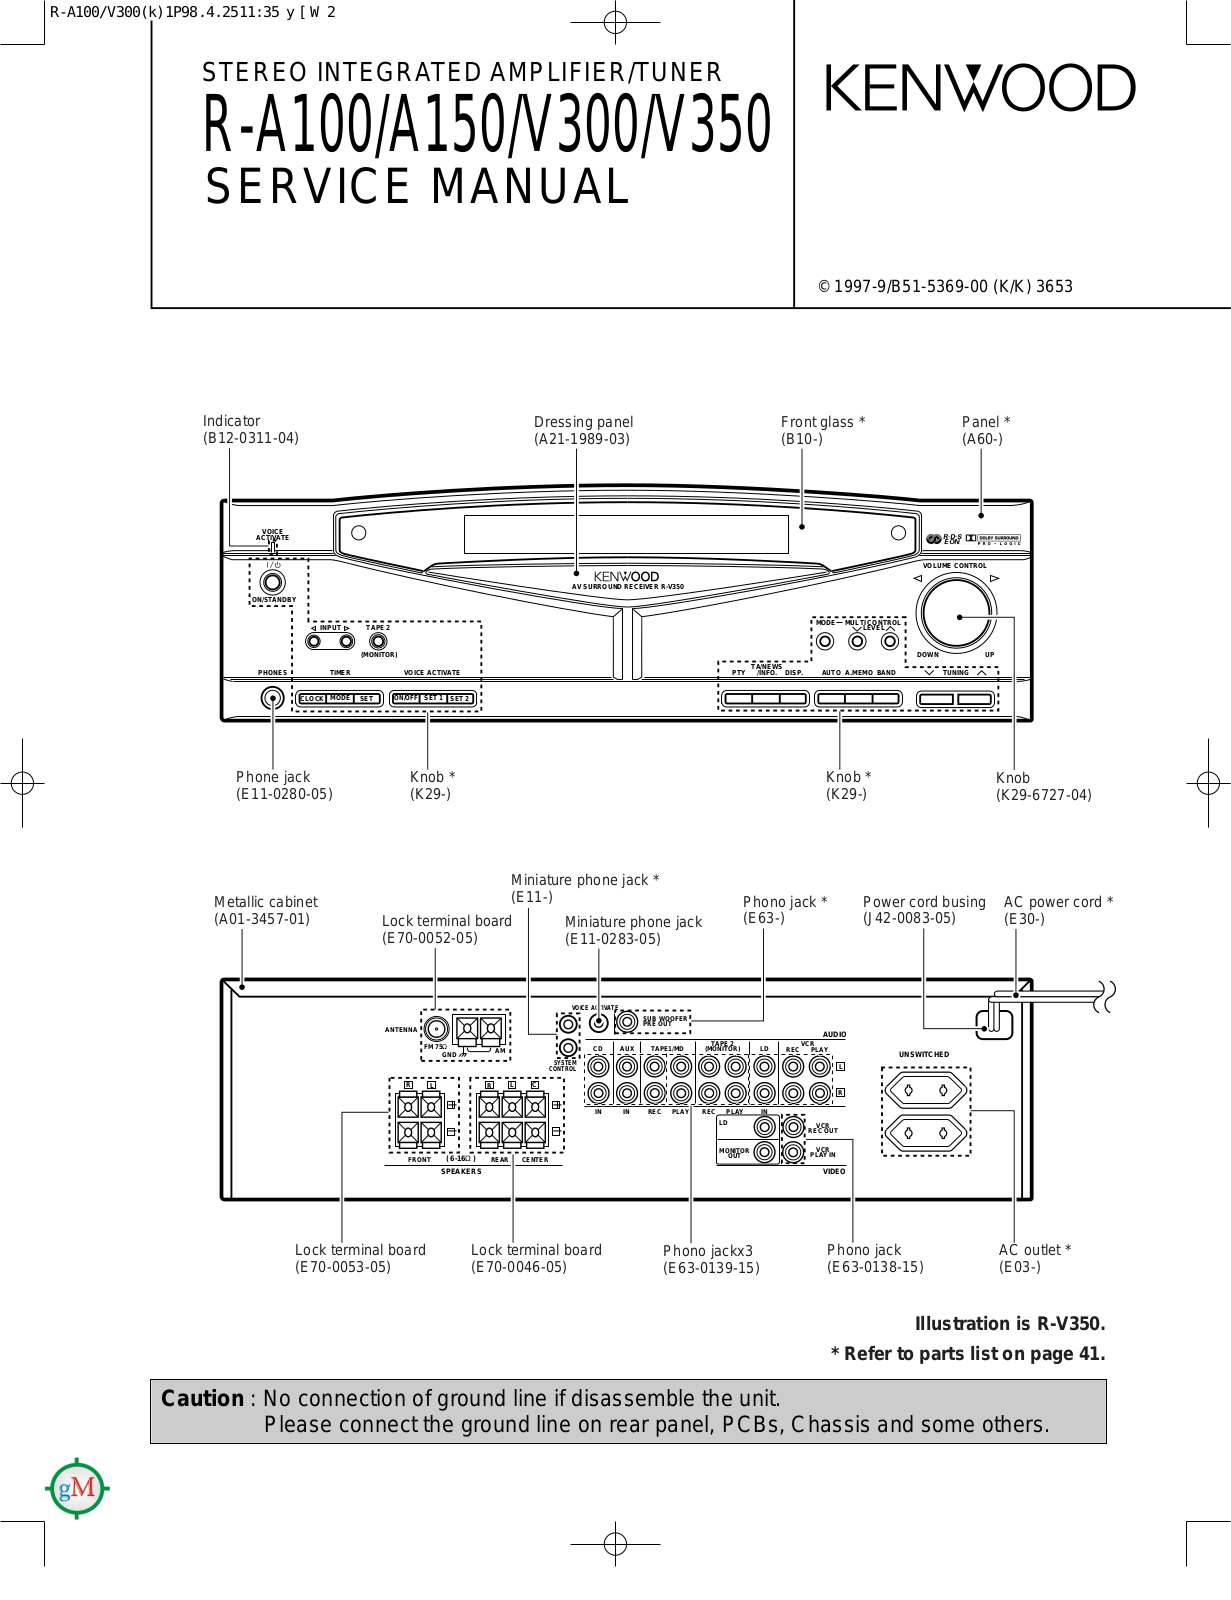 Kenwood RA-150, RA-100, RV-350, RV-300 Service manual